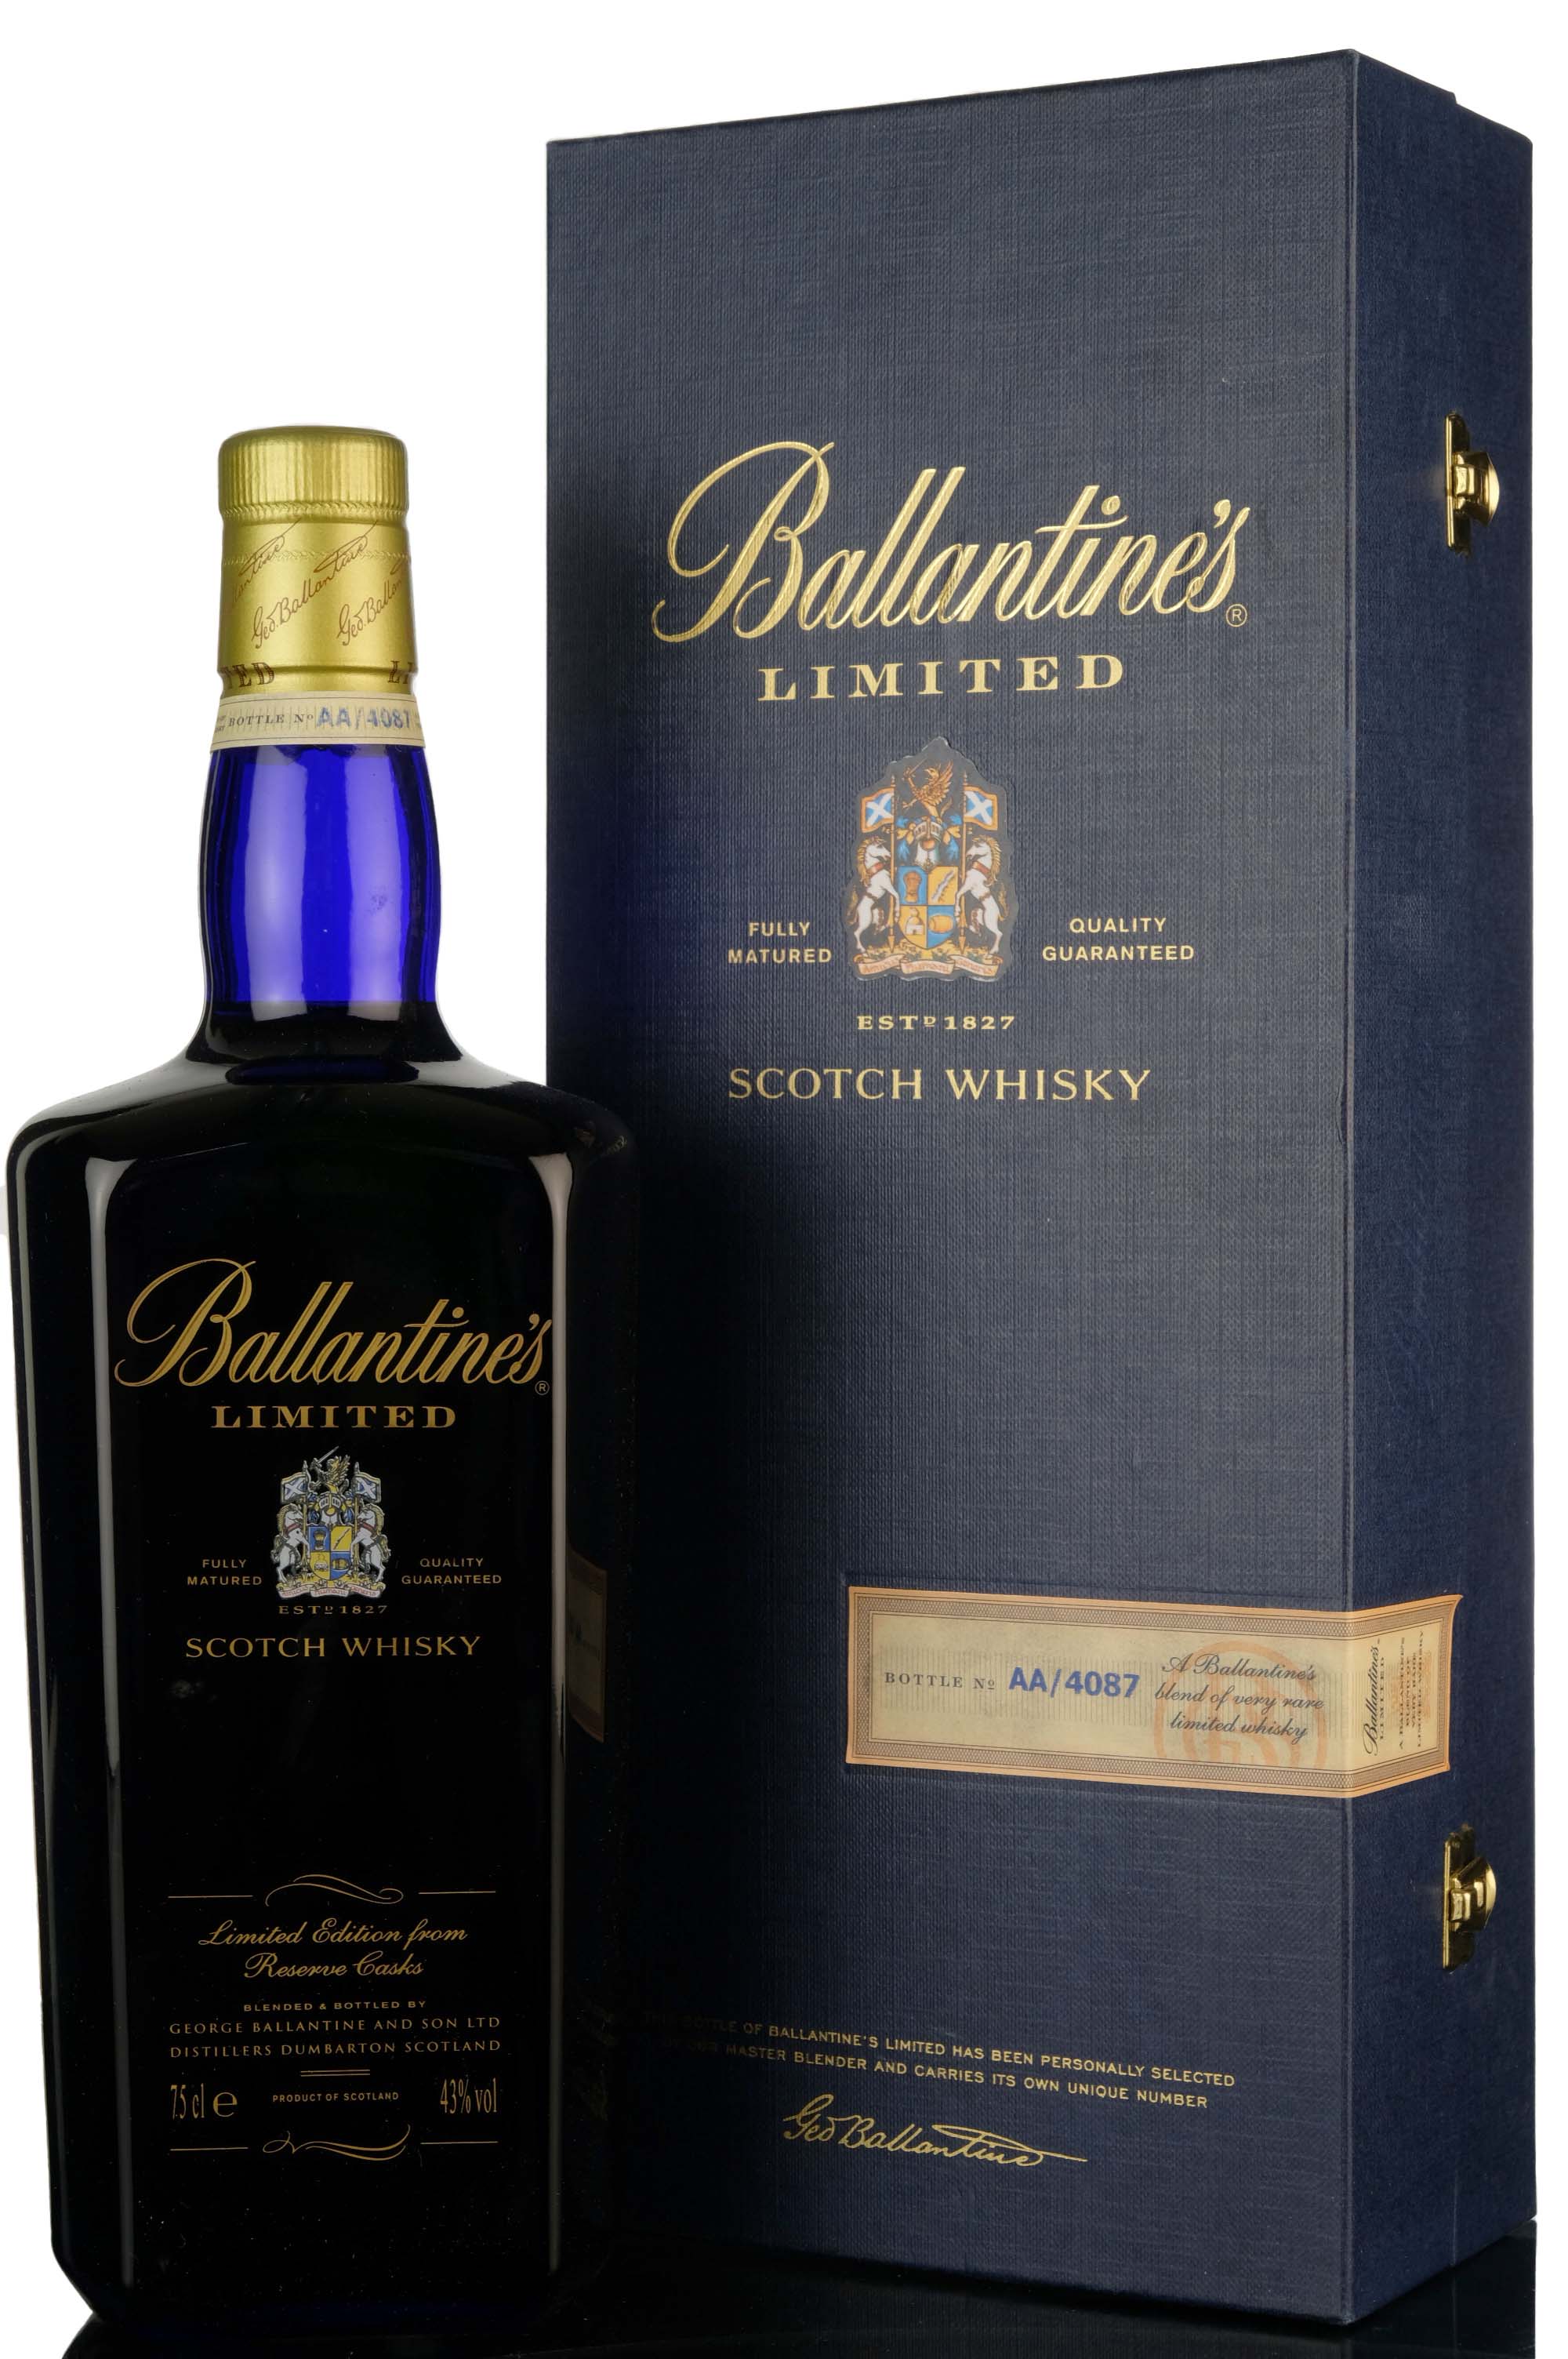 Ballantines Limited Edition